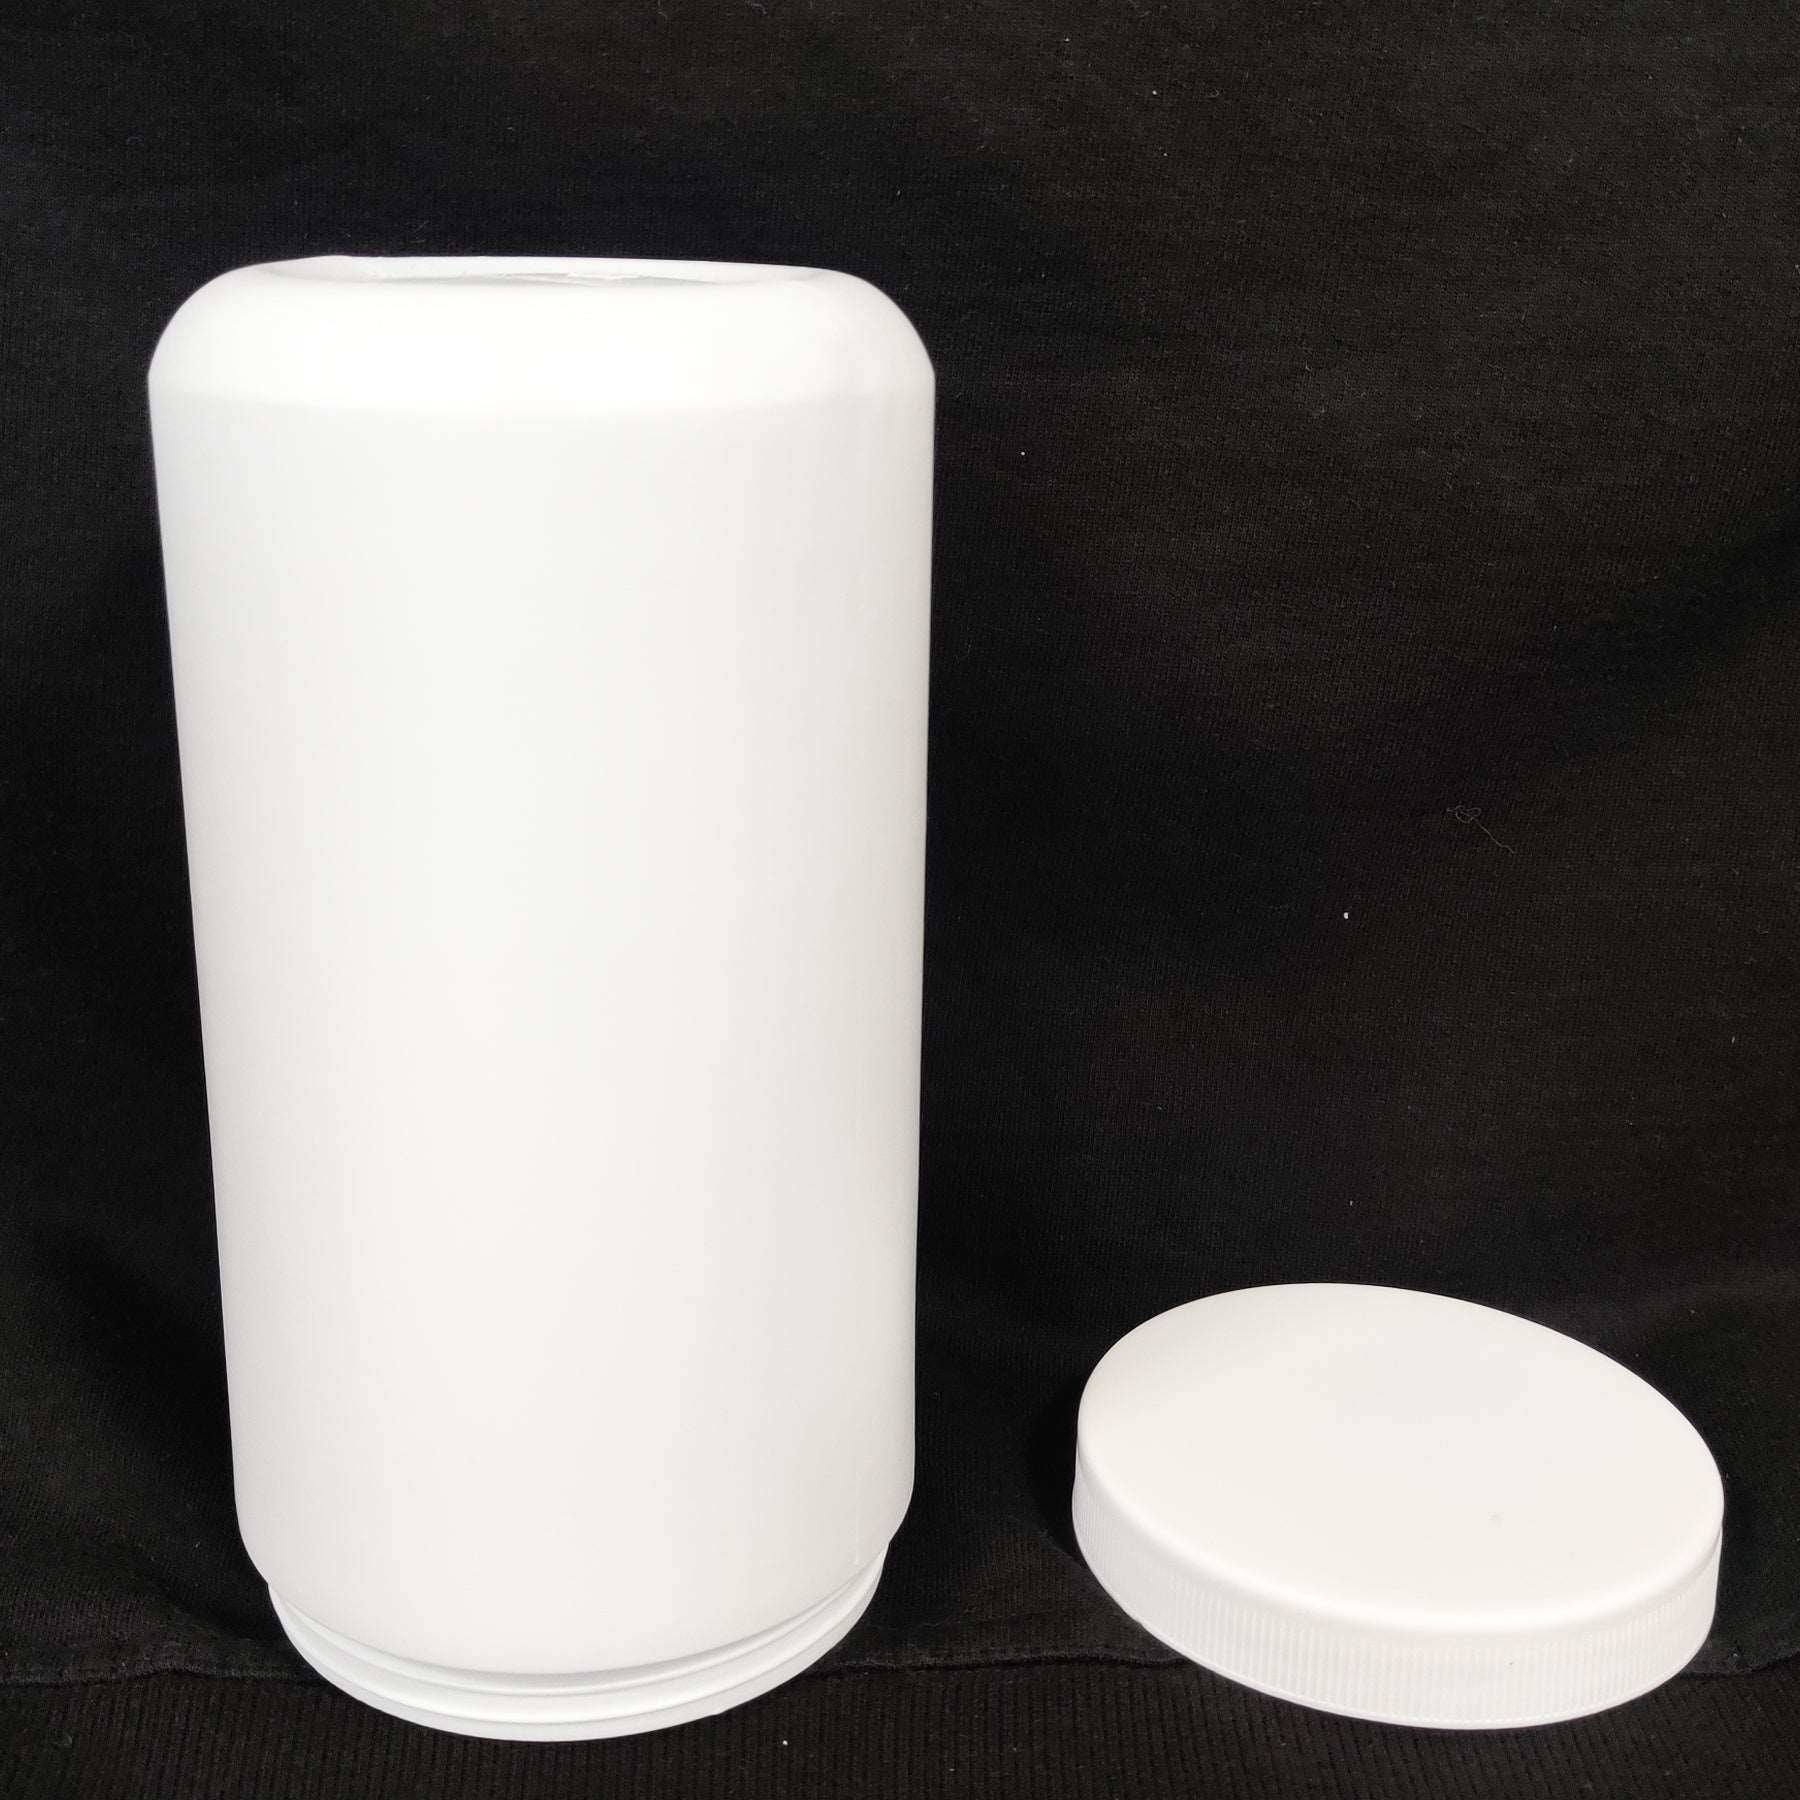 1000ml White HDPE Empty Container - for Ayurvedic Powder Storage Air Tight Patco Pharma